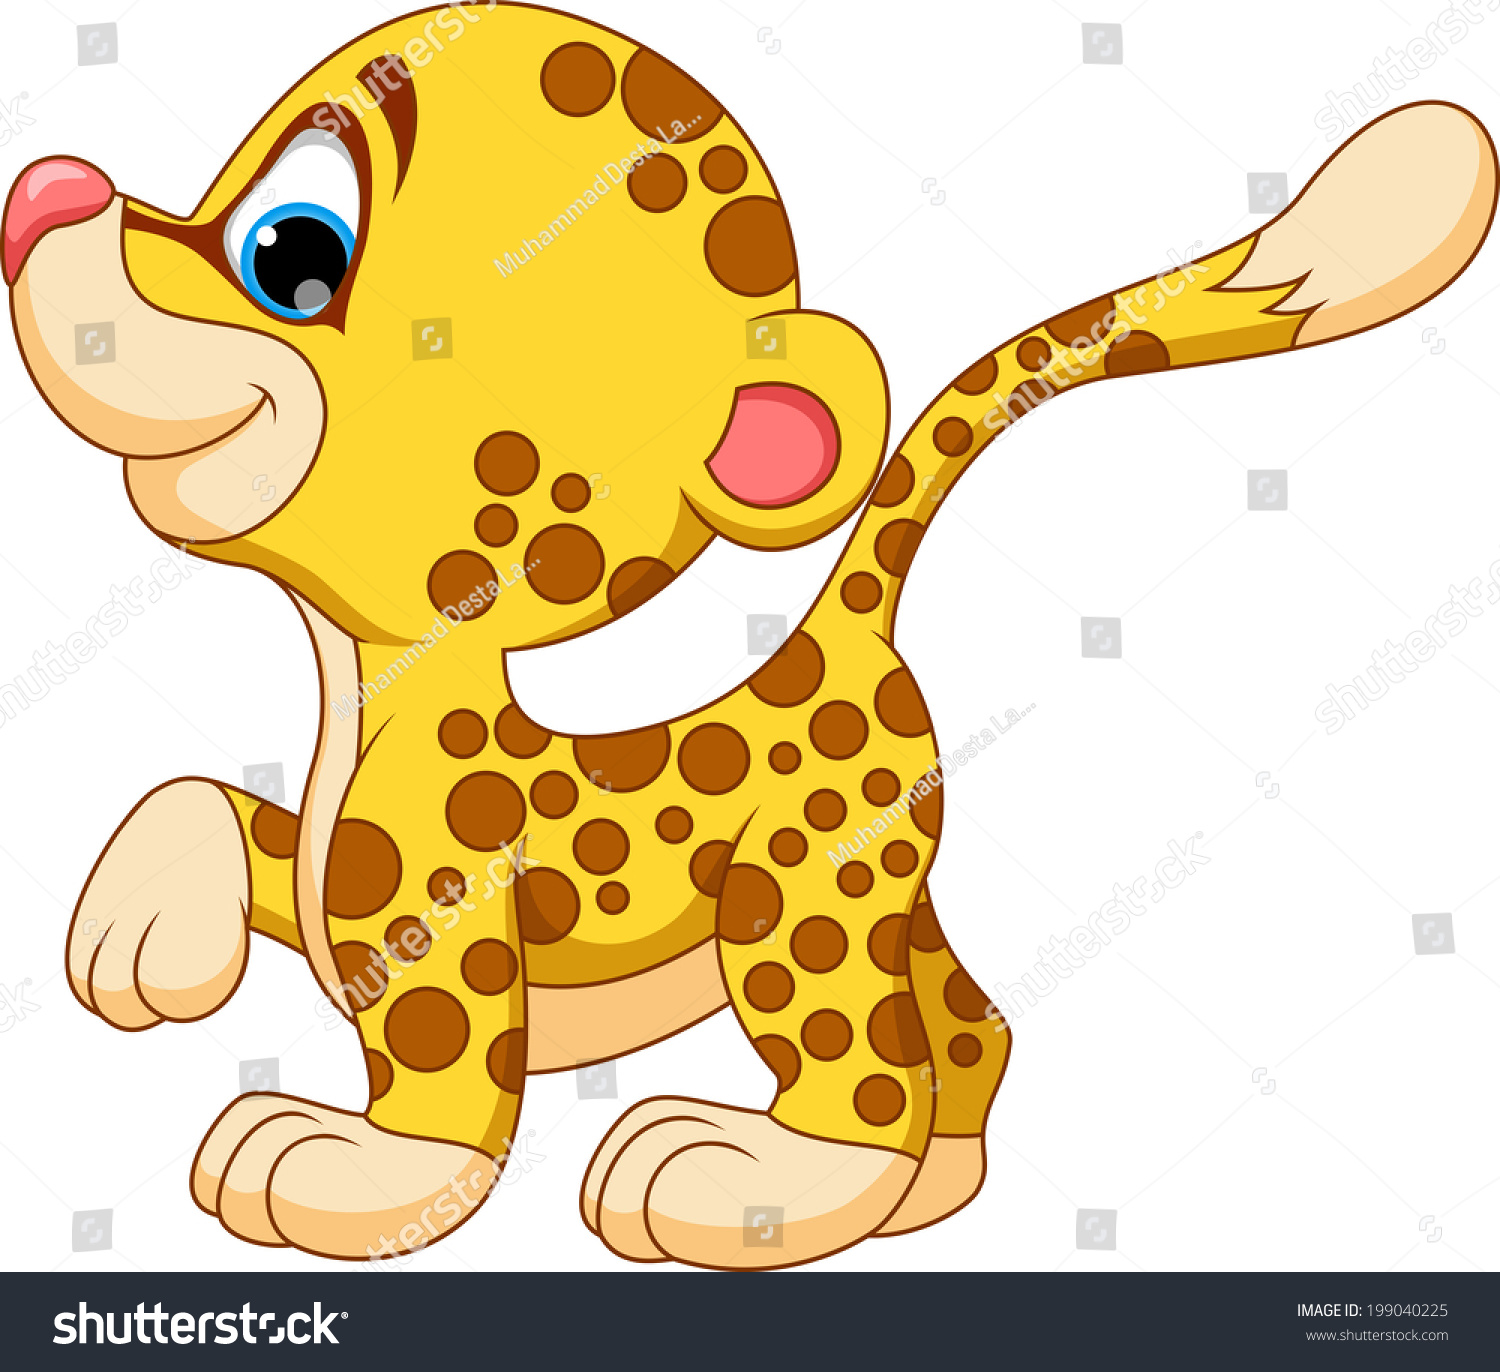 Download HD Free Leopard Jaguar Illustration - Angry Cheetah Face ...